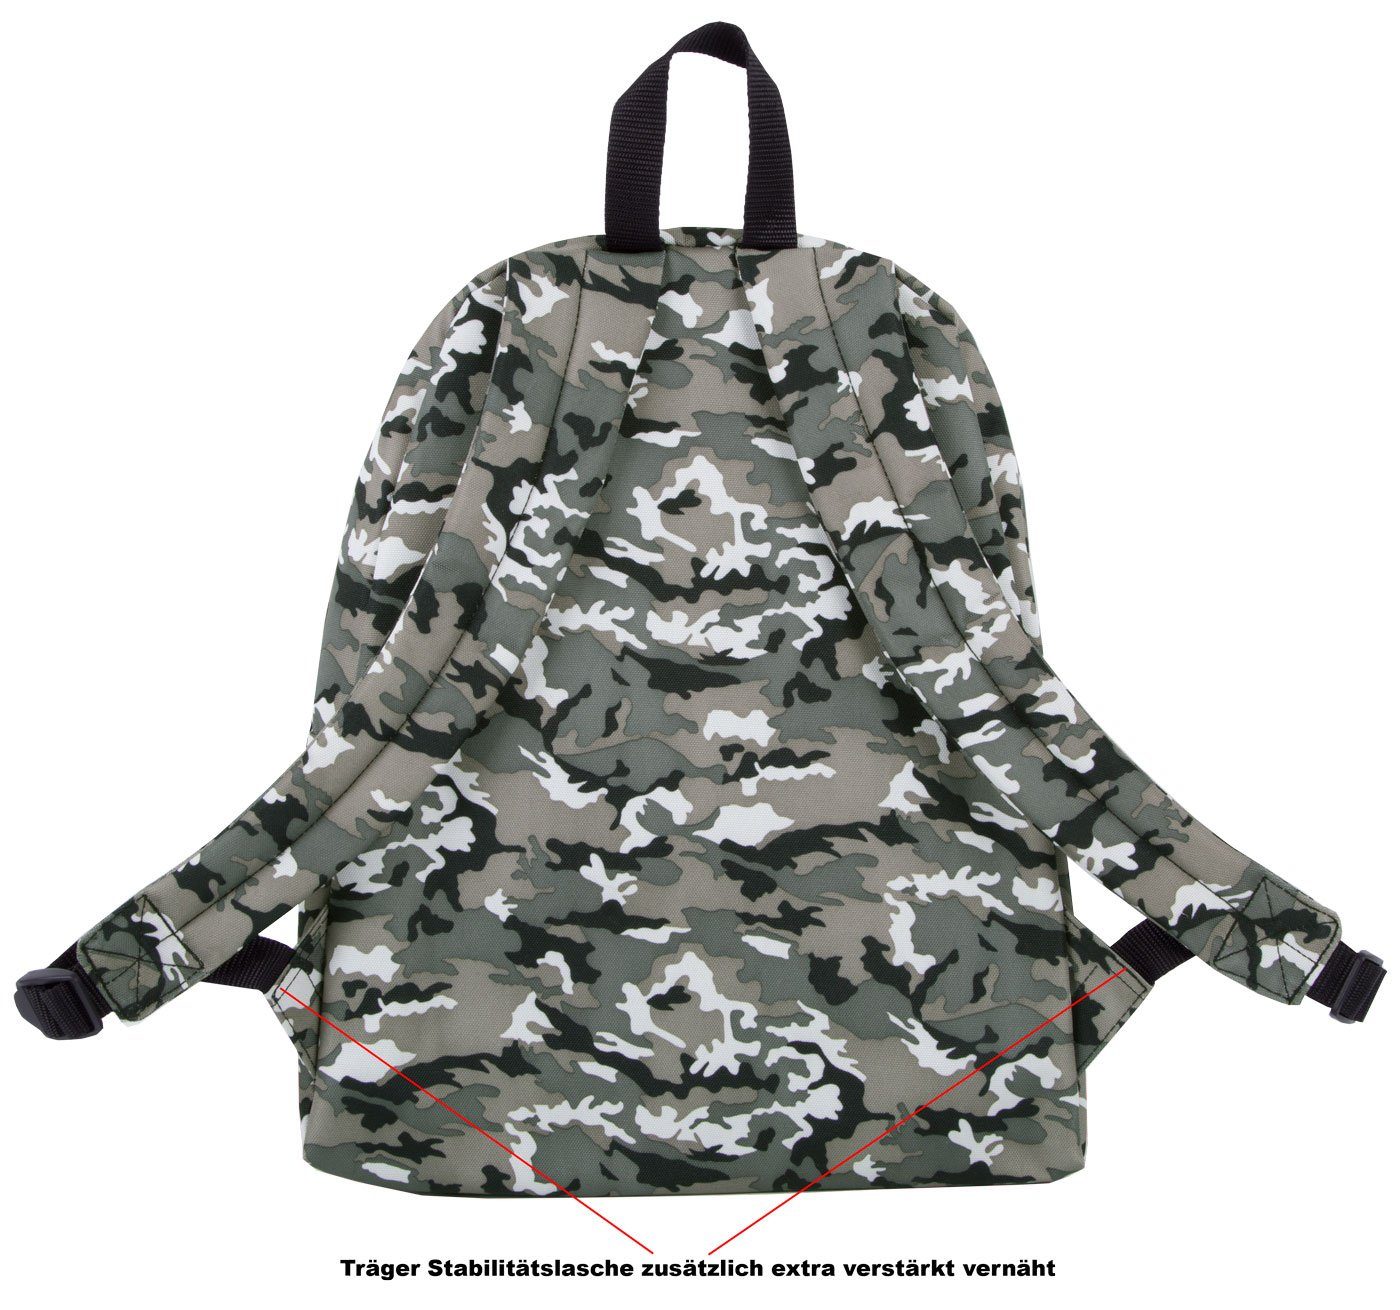 in Freizeitrucksack Camouflage, Sportrucksack herausnehmbaren Ice Classic Camo Backpack mit 2Stoned Einlegeboden